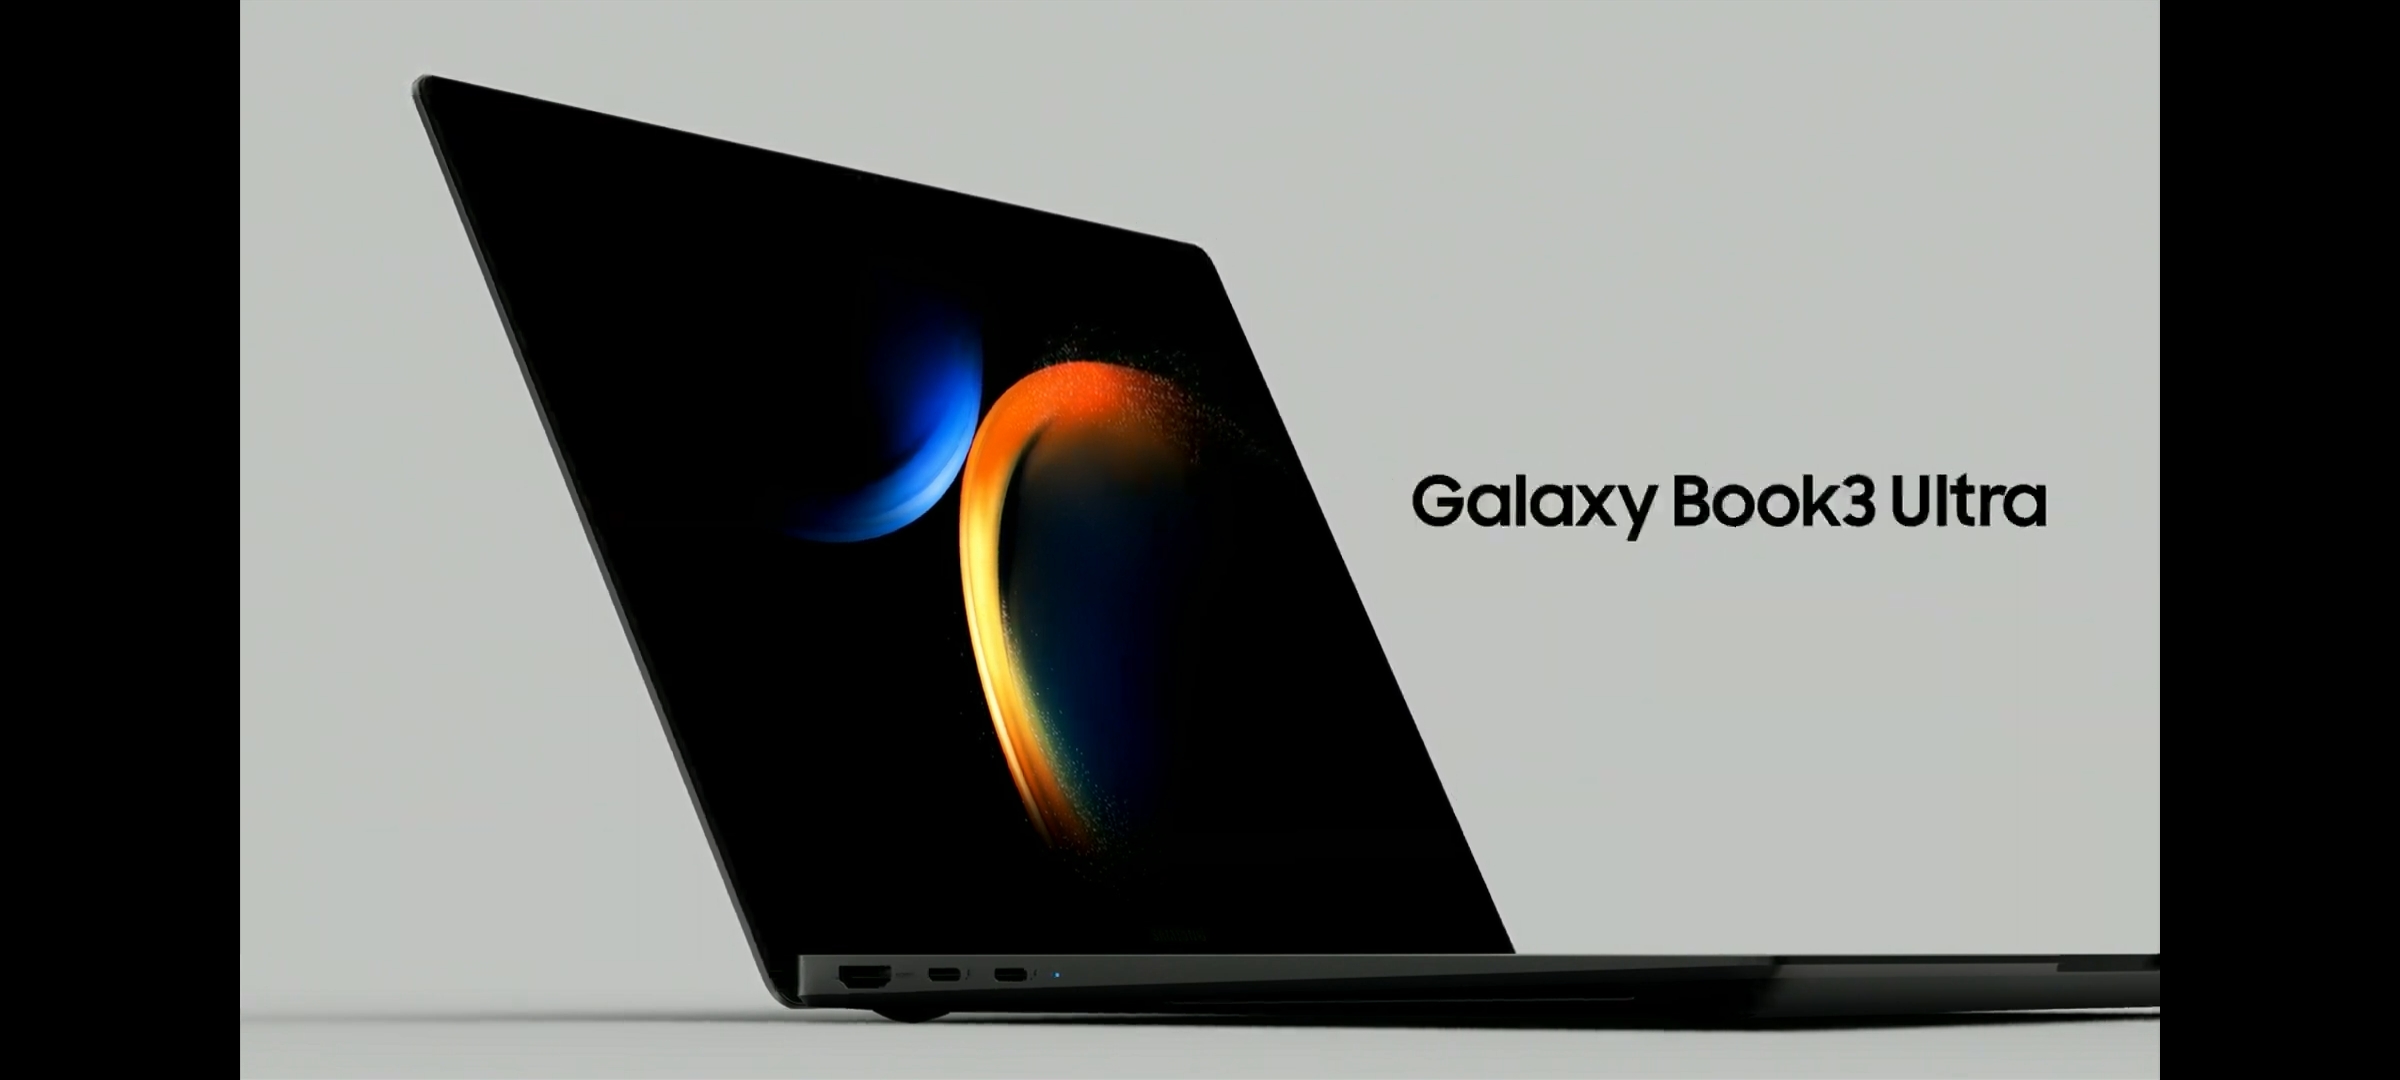 Samsung reveals new Galaxy Book3 Ultra, Book3 Pro 360 and Book3 Pro PCs